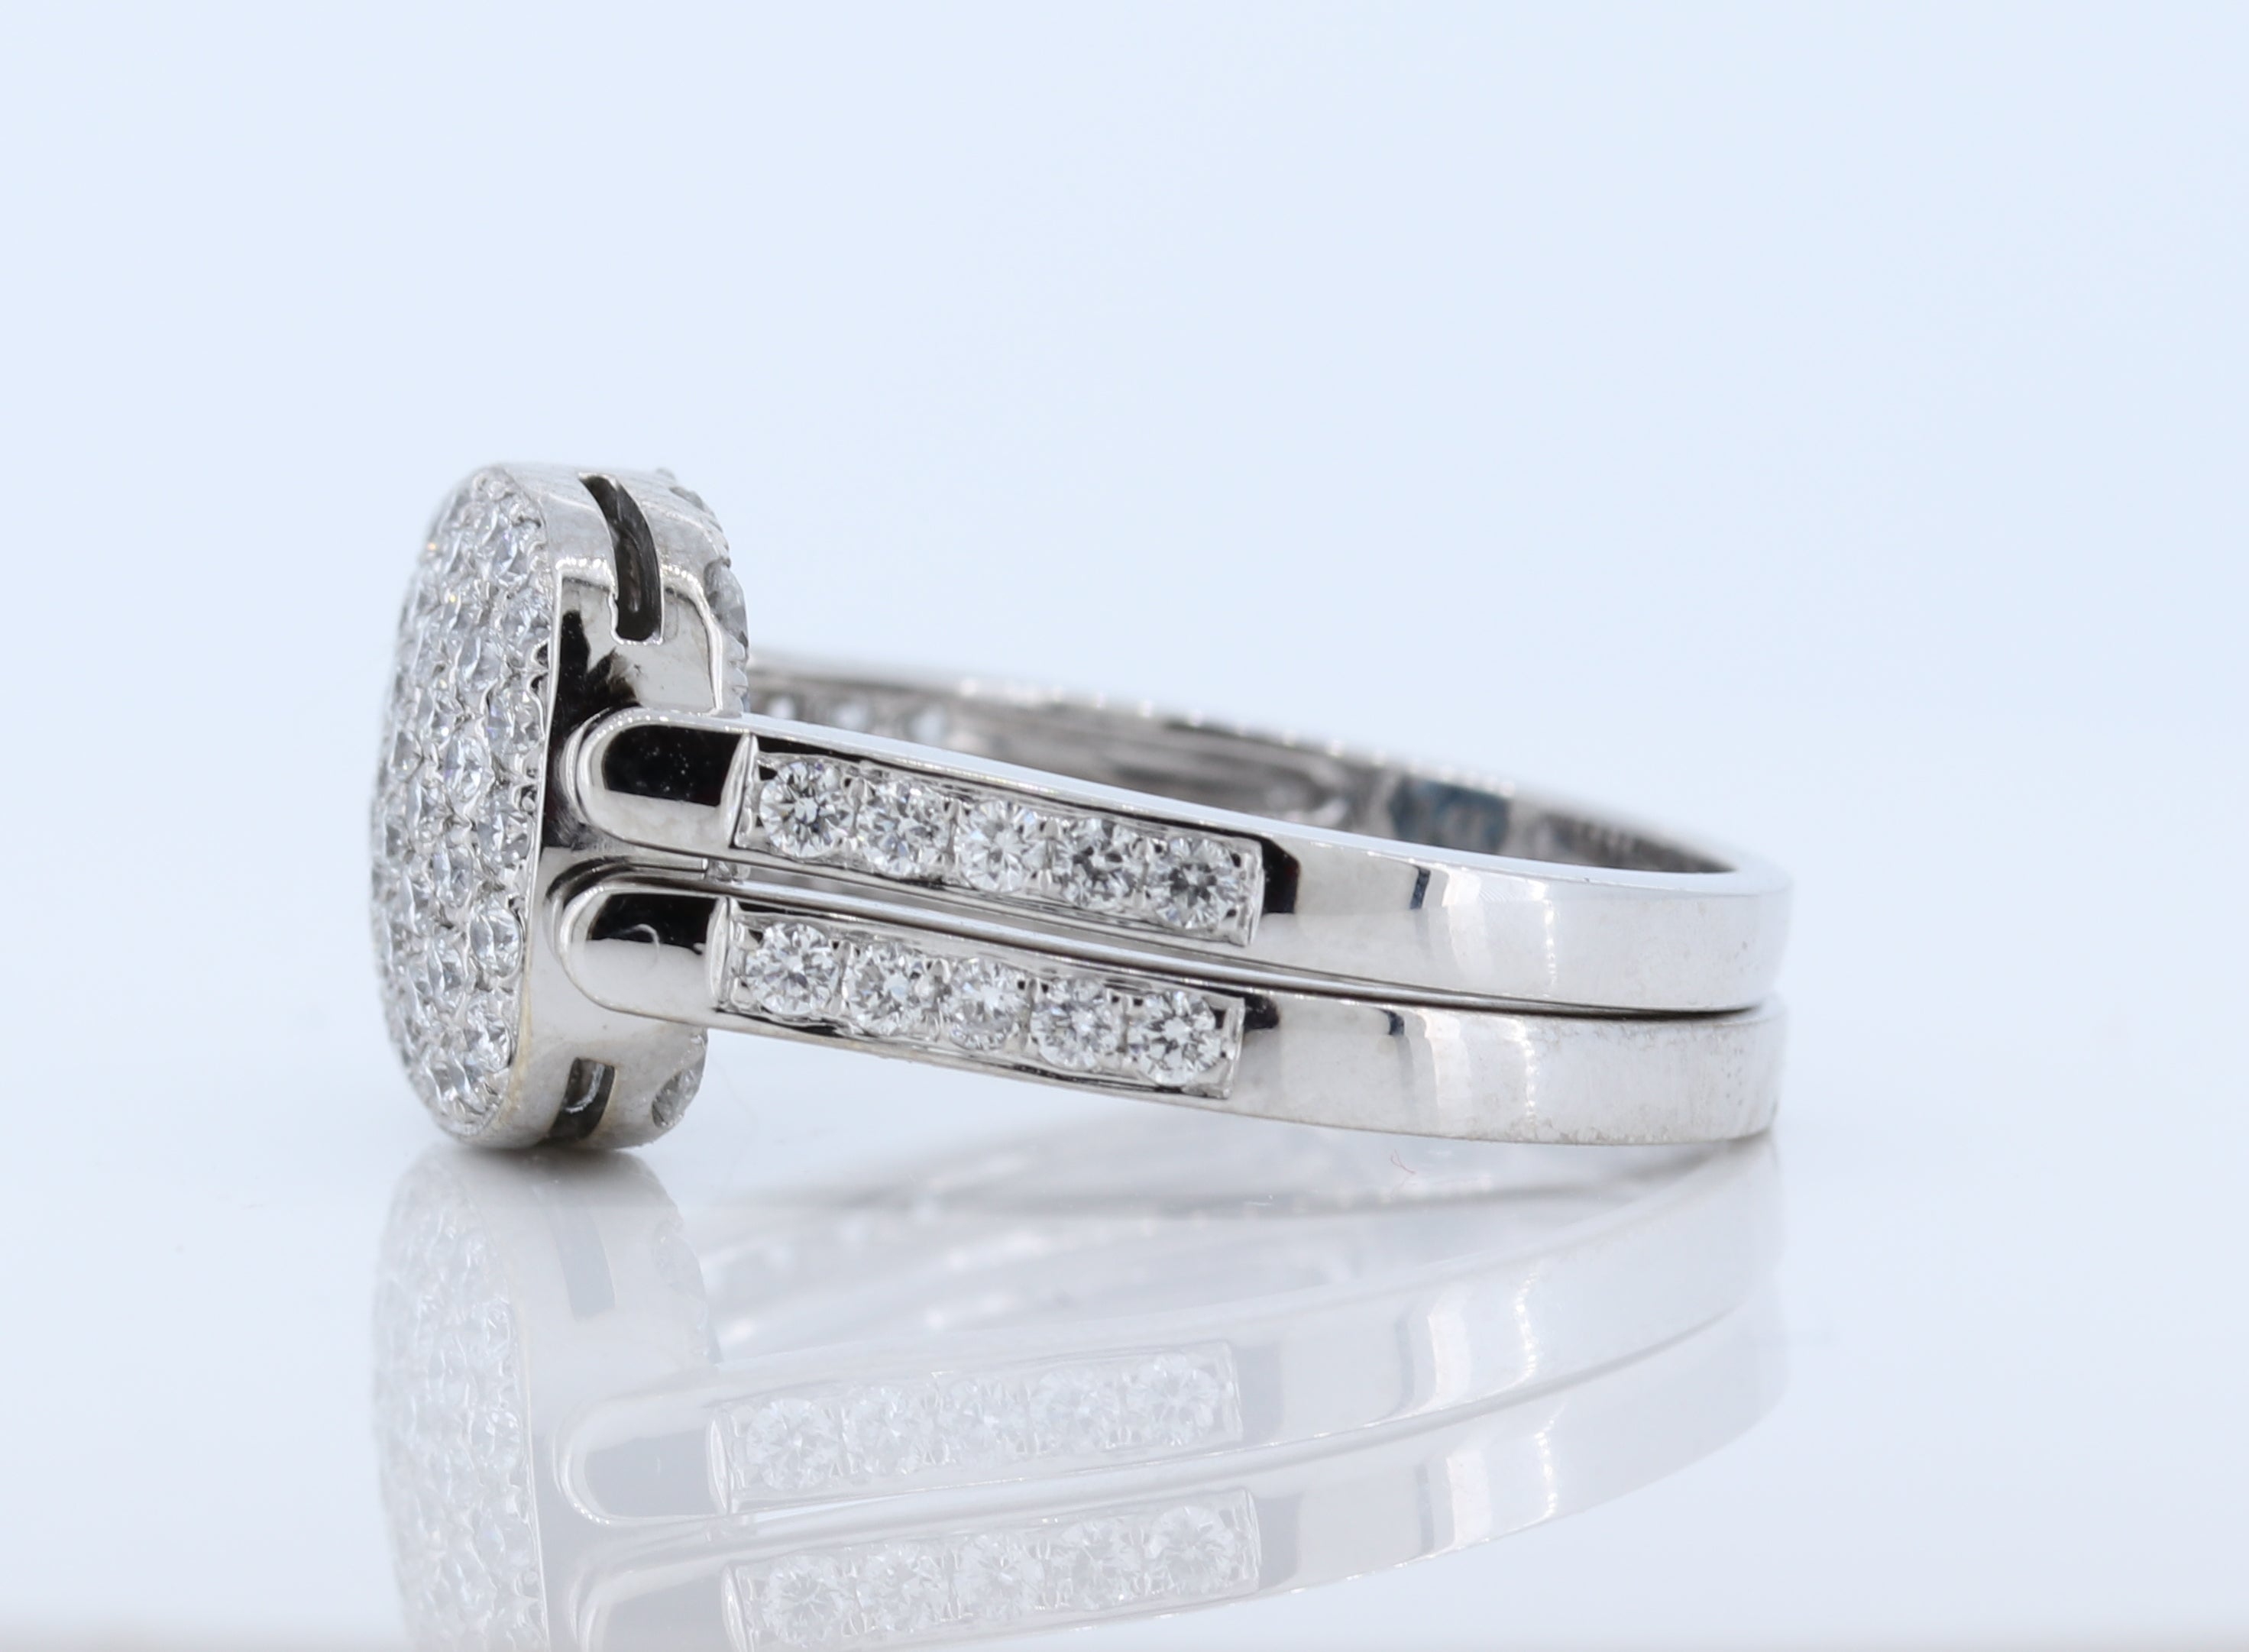 American Swiss Silver Wedding Ring | Silver wedding rings, Wedding rings,  Buy rings